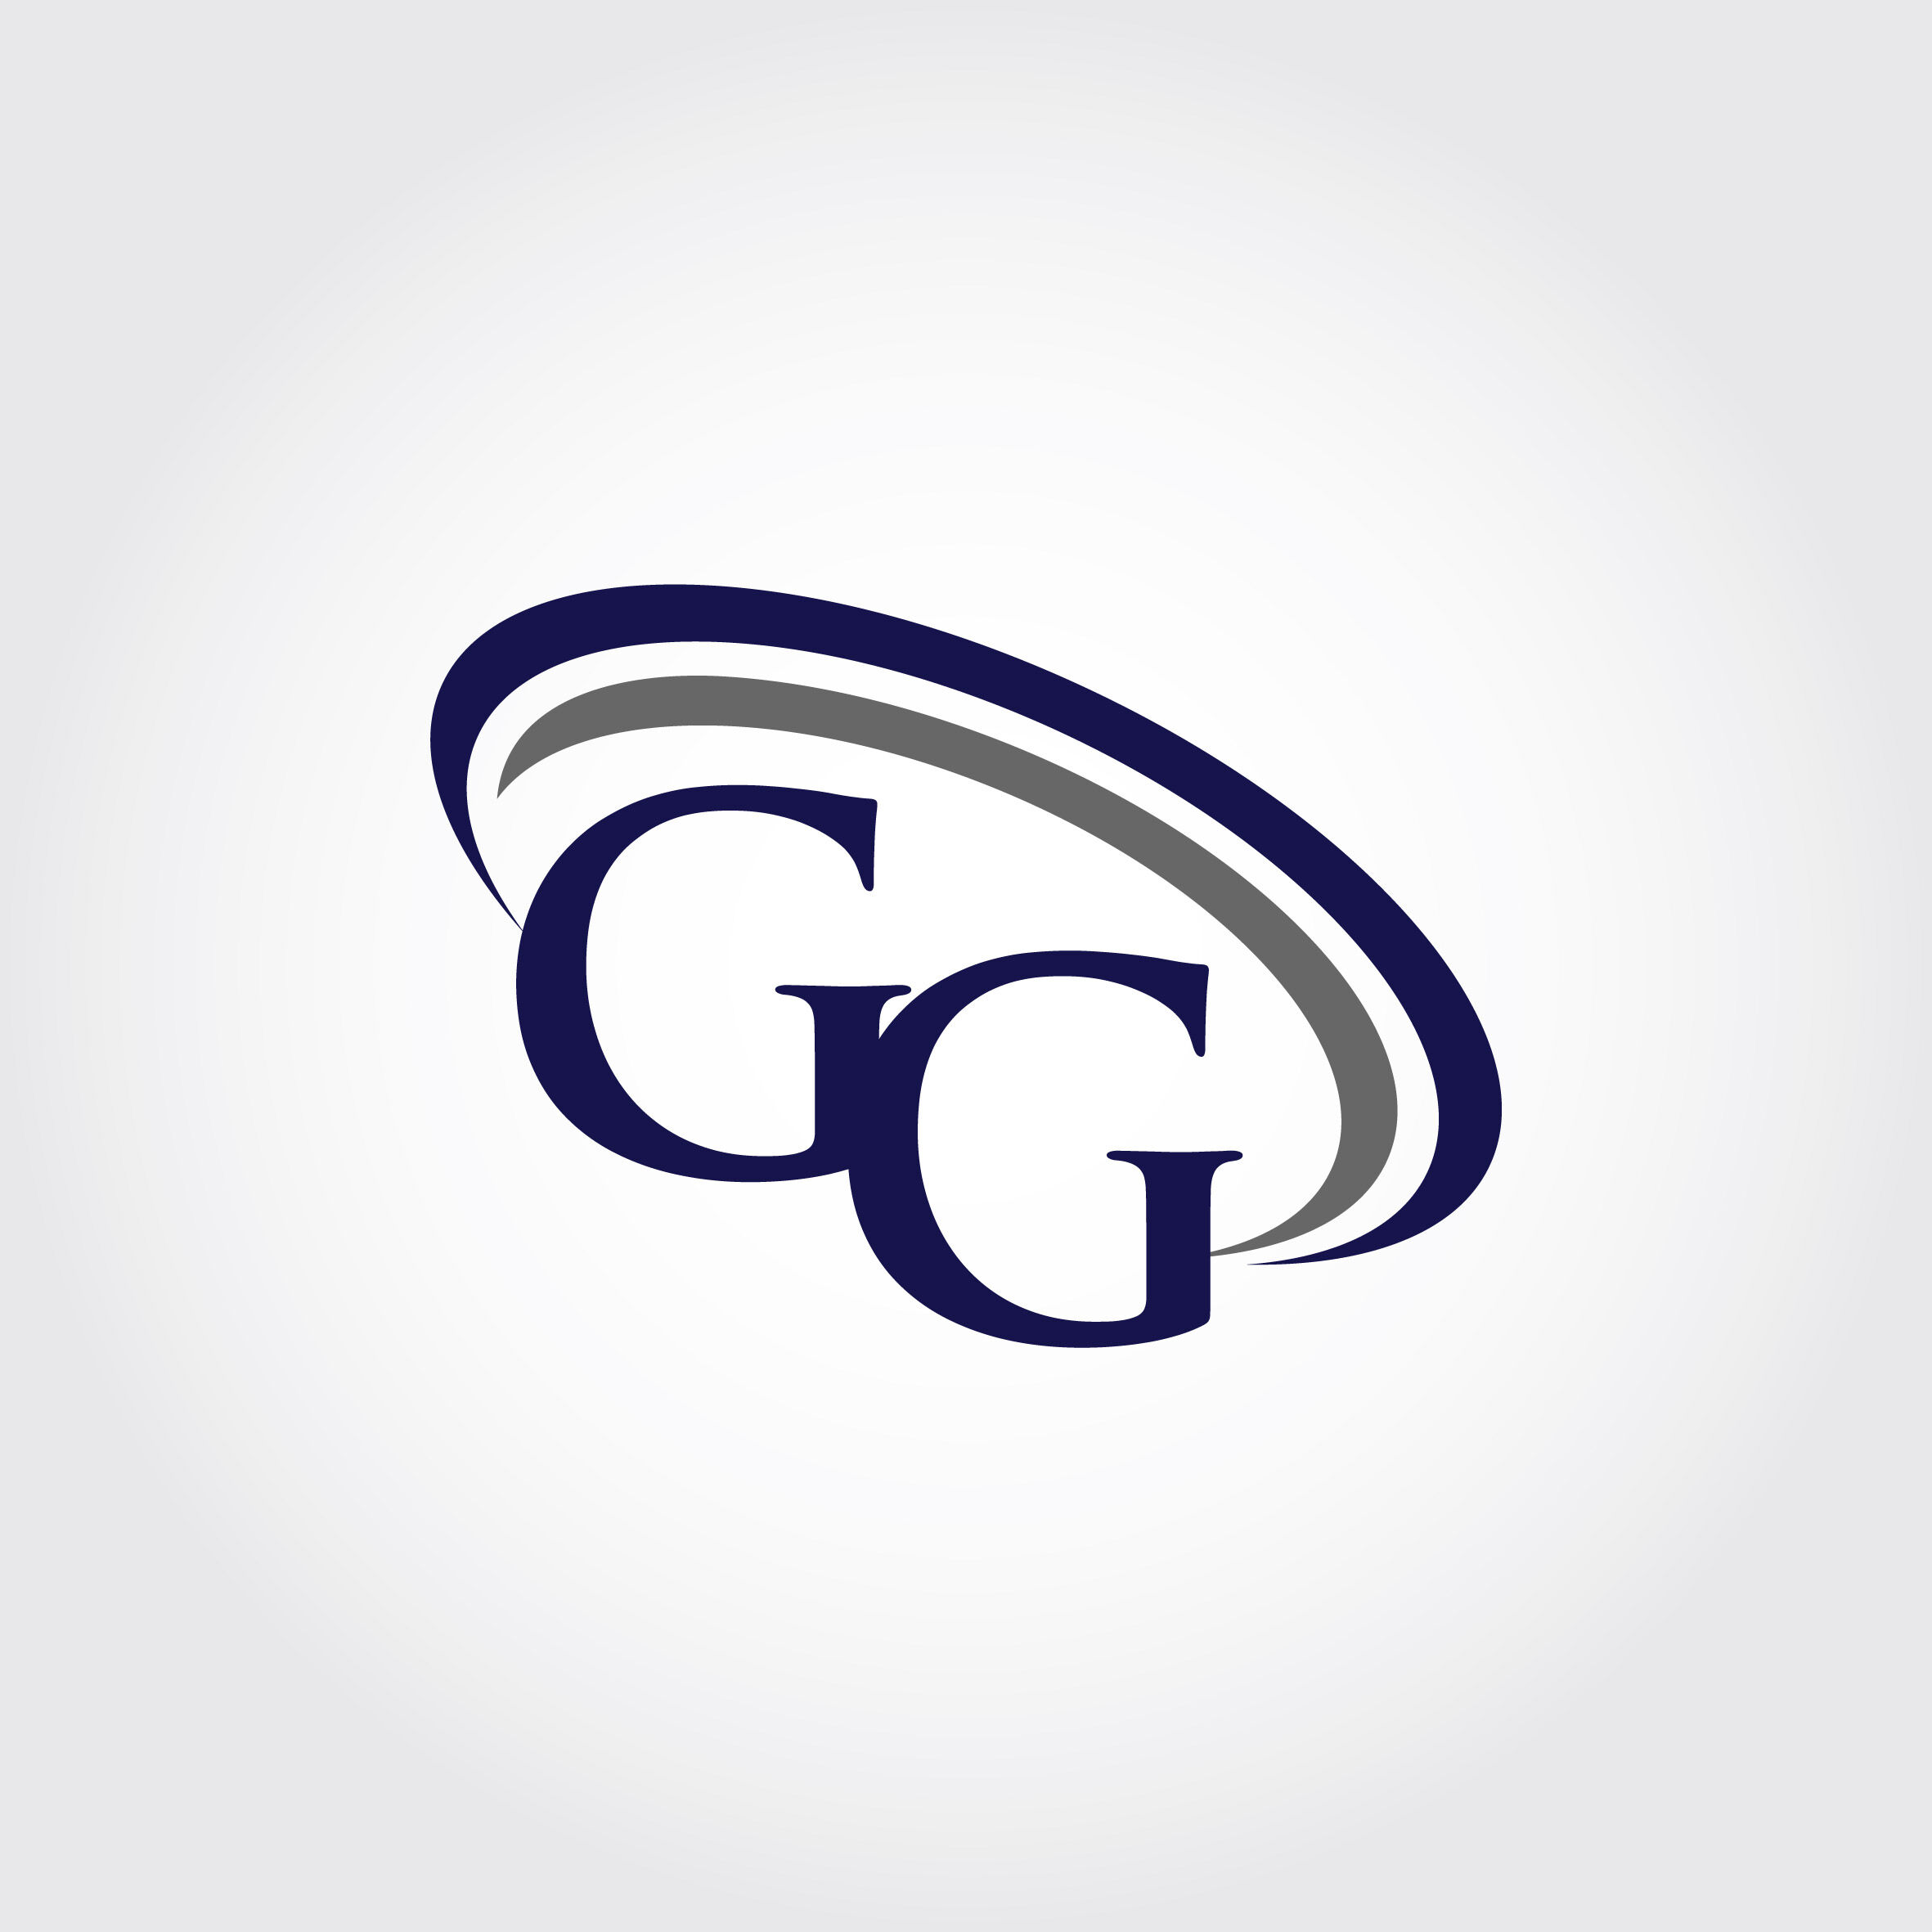 Monogram GG Logo Design By Vectorseller 